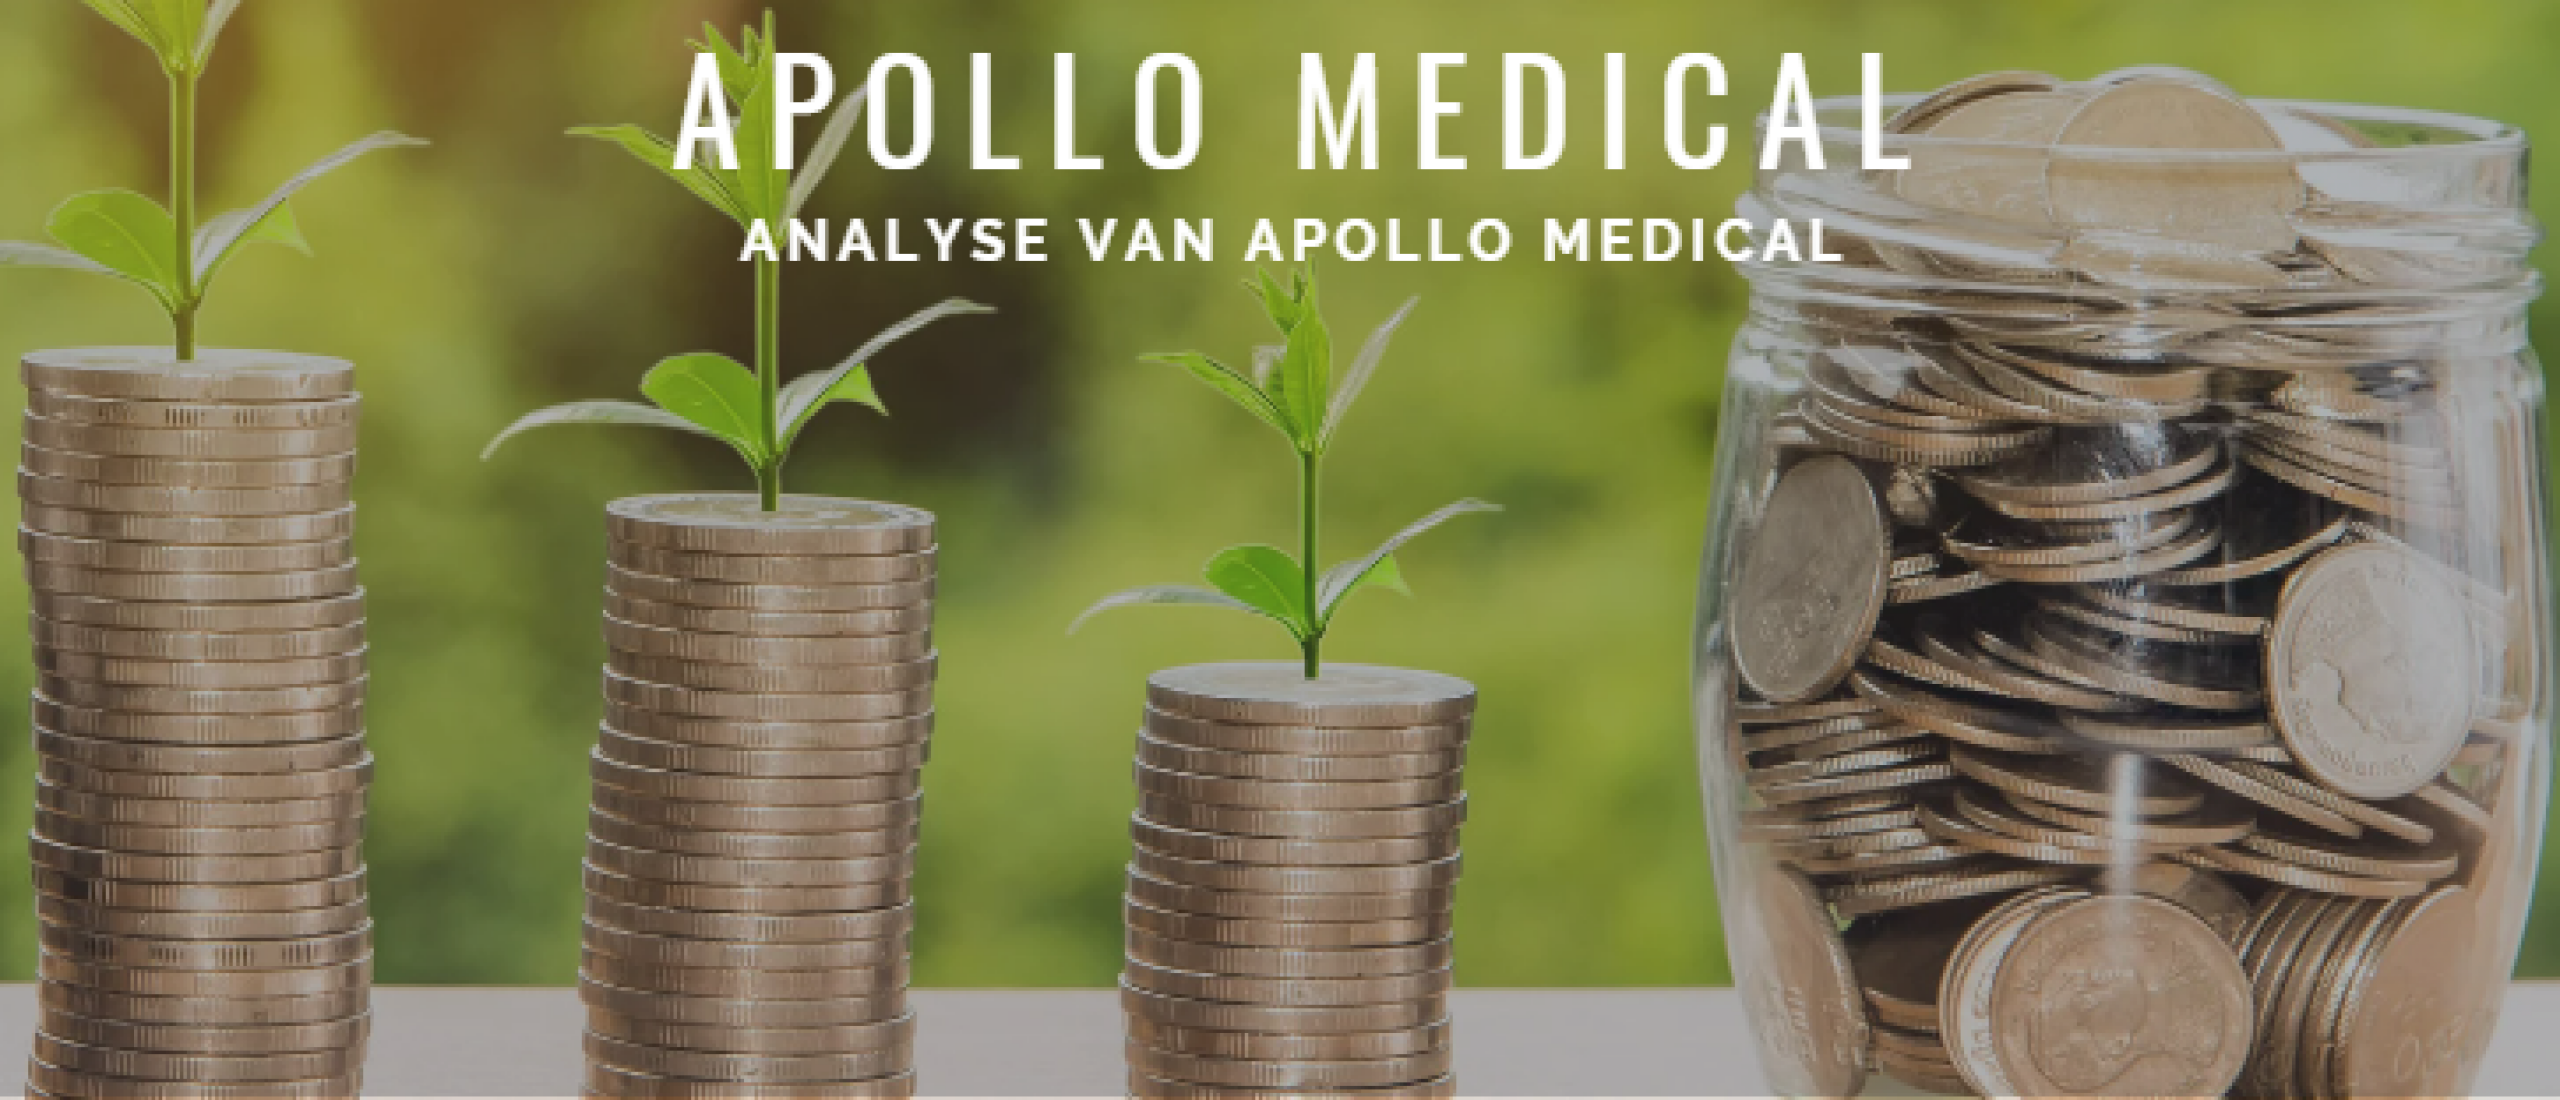 apollo-medical-groei-analyse-aandelen